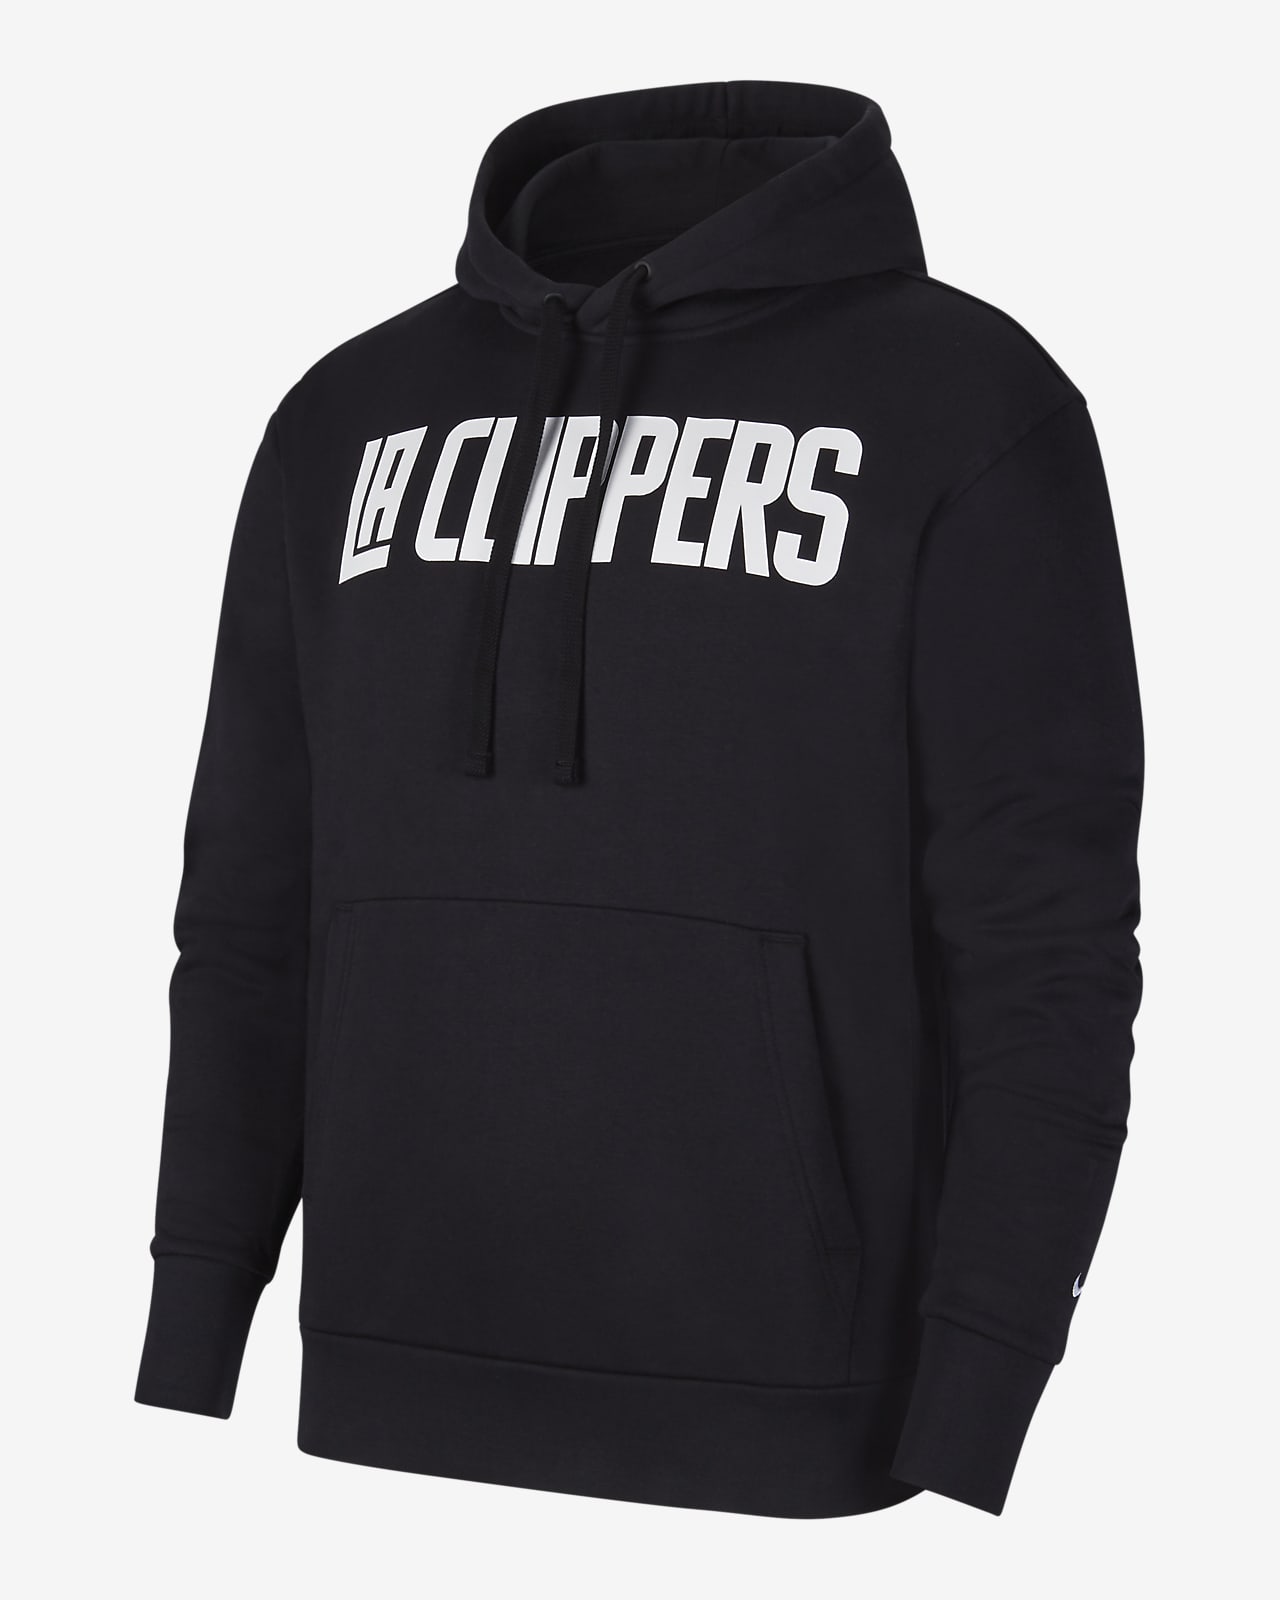 clippers sweatshirt